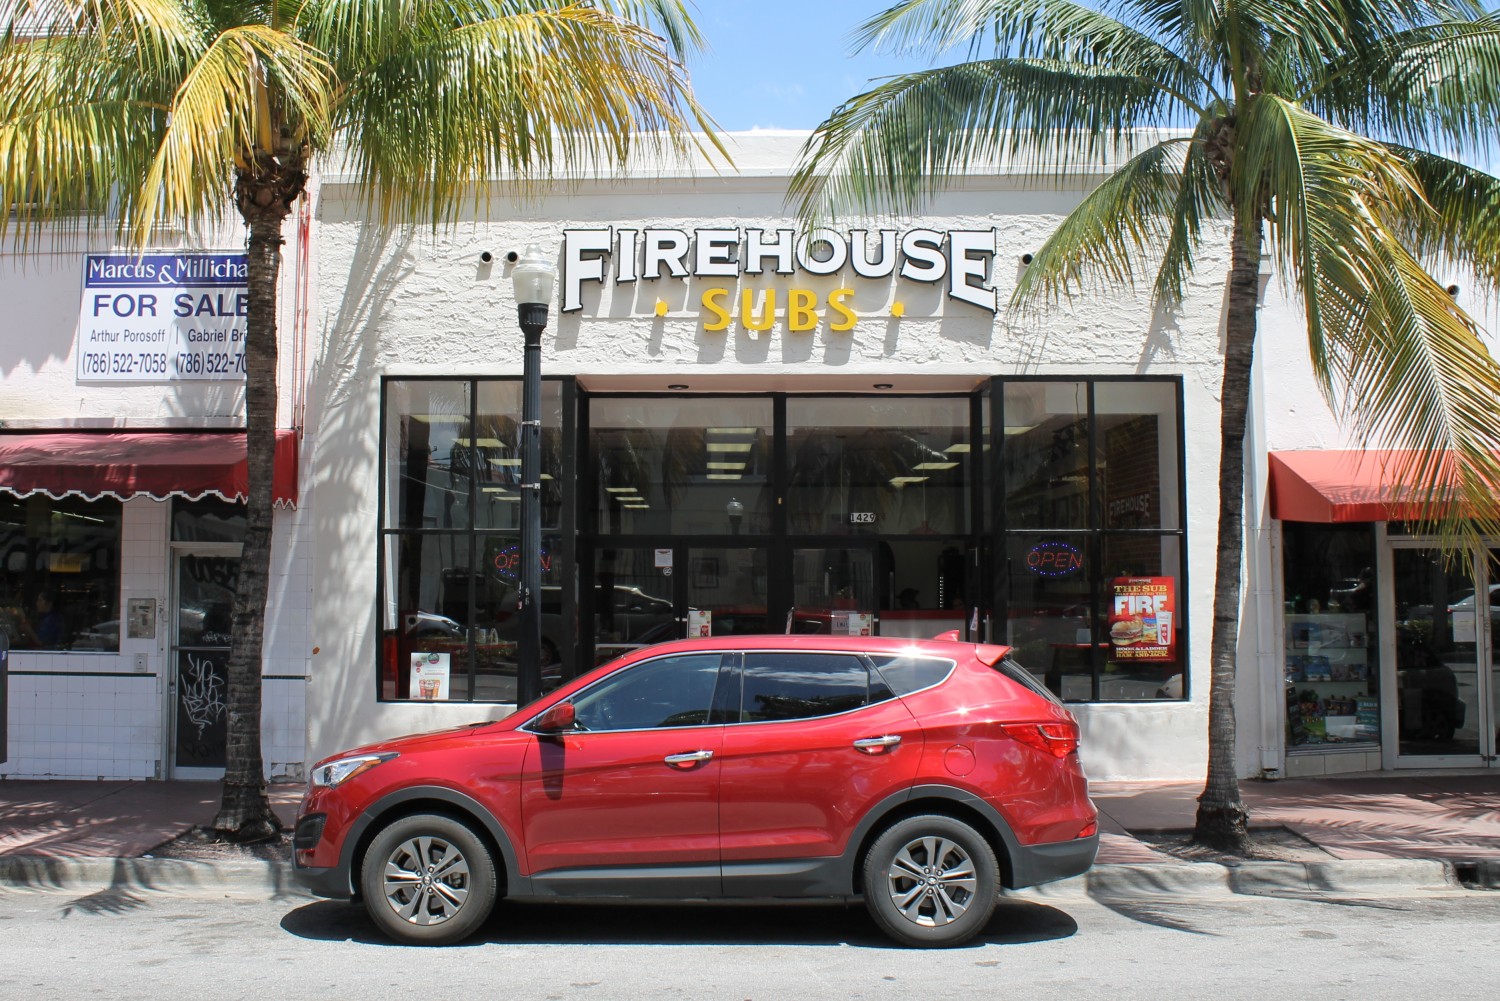 New Firehouse Subs South Beach